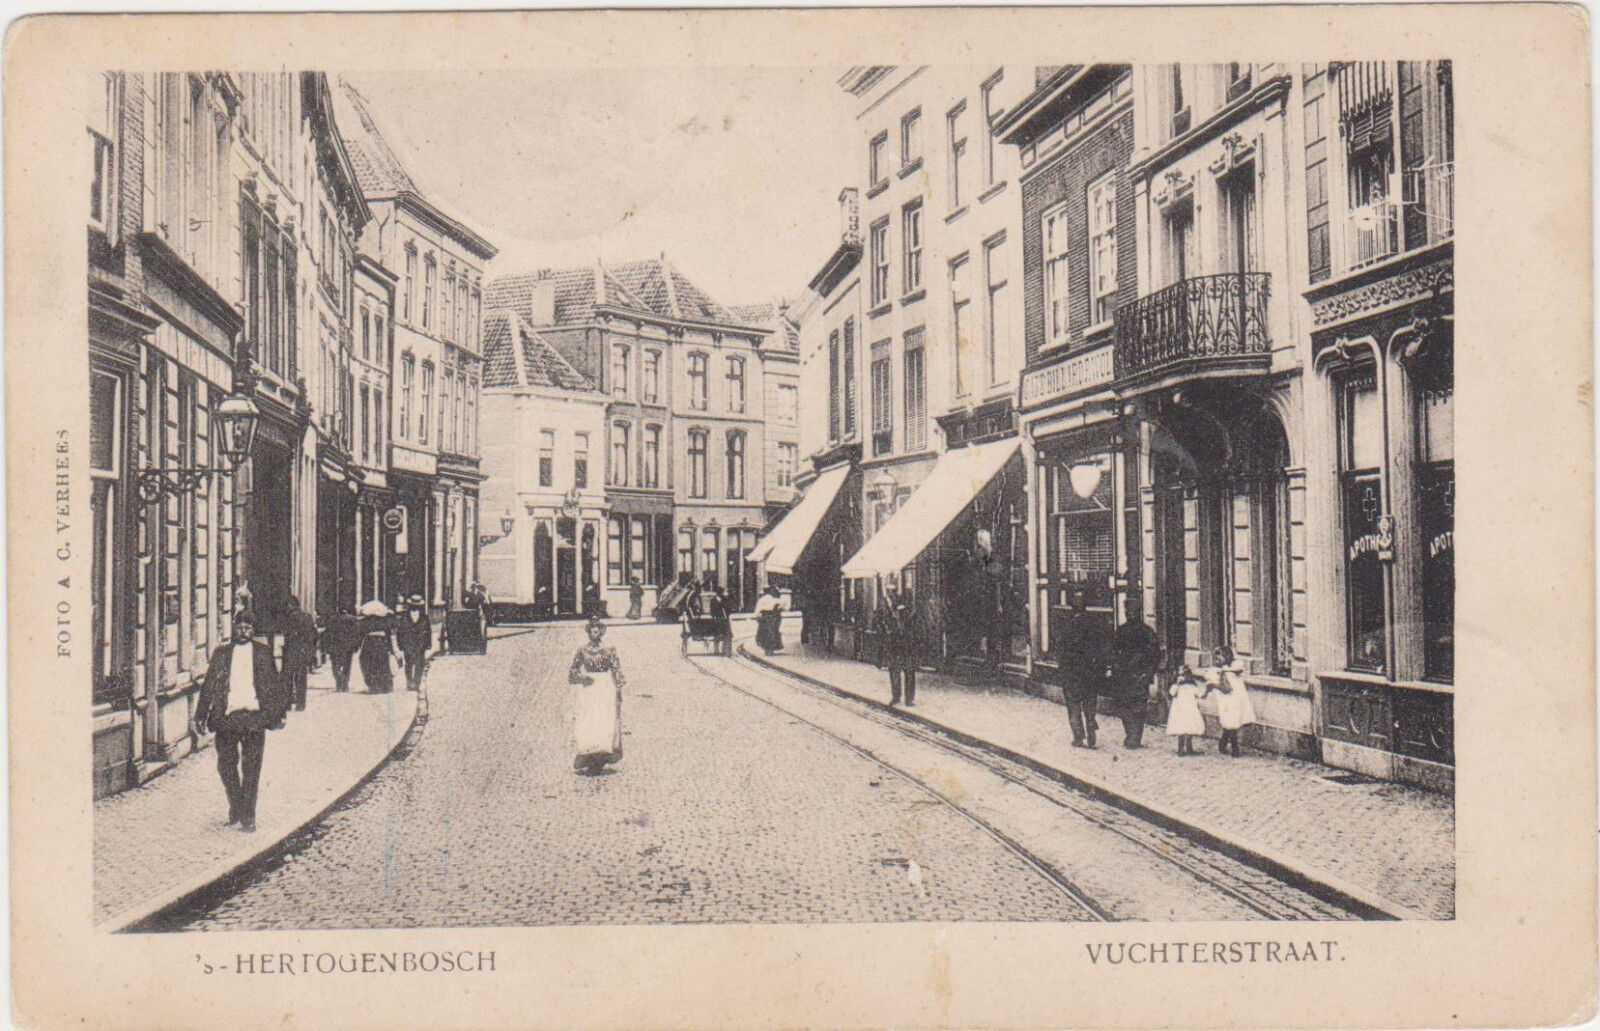 Hertogenbosch,Netherlands,Vuchterstraat,Used,1910